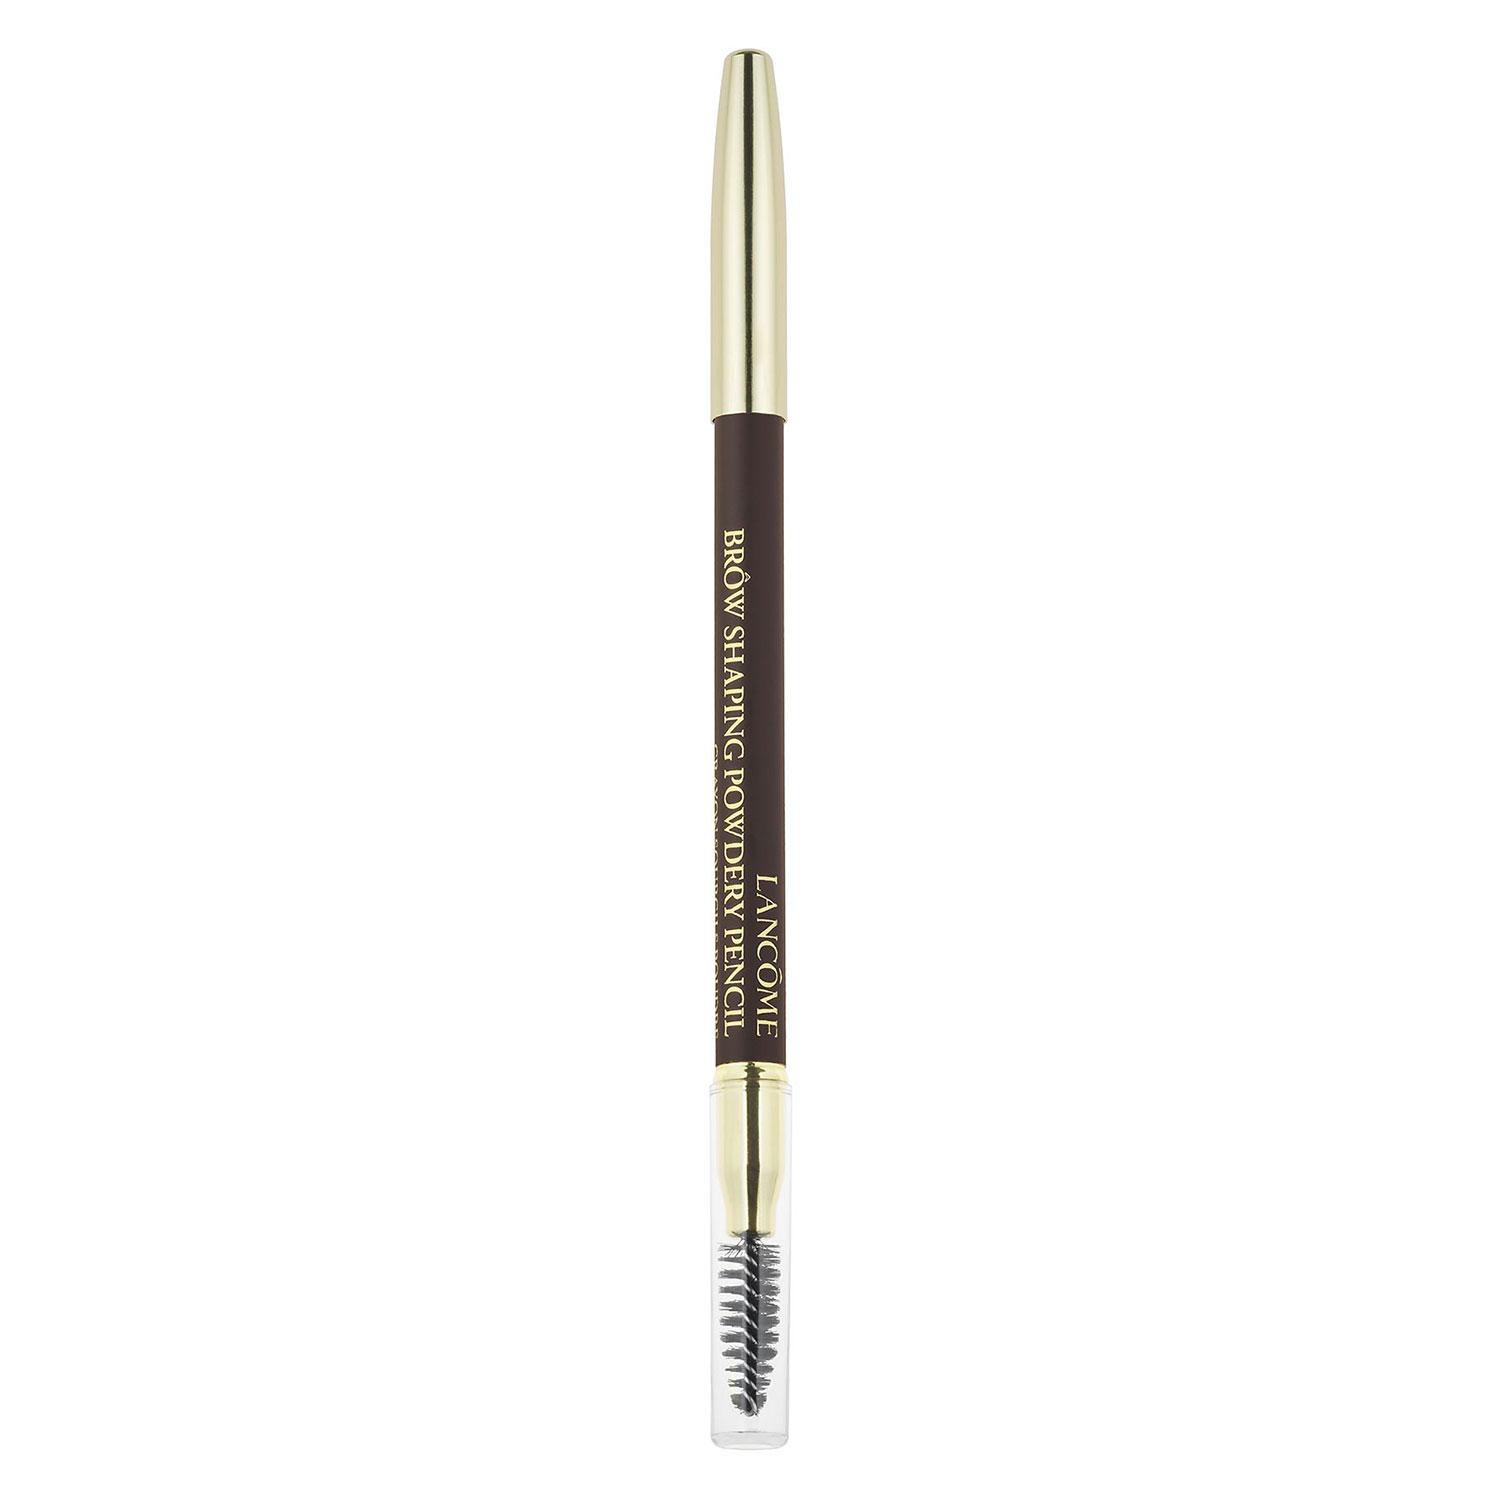 Lancôme Brows - Brow Shaping Powdery Pencil Dark Brown 08